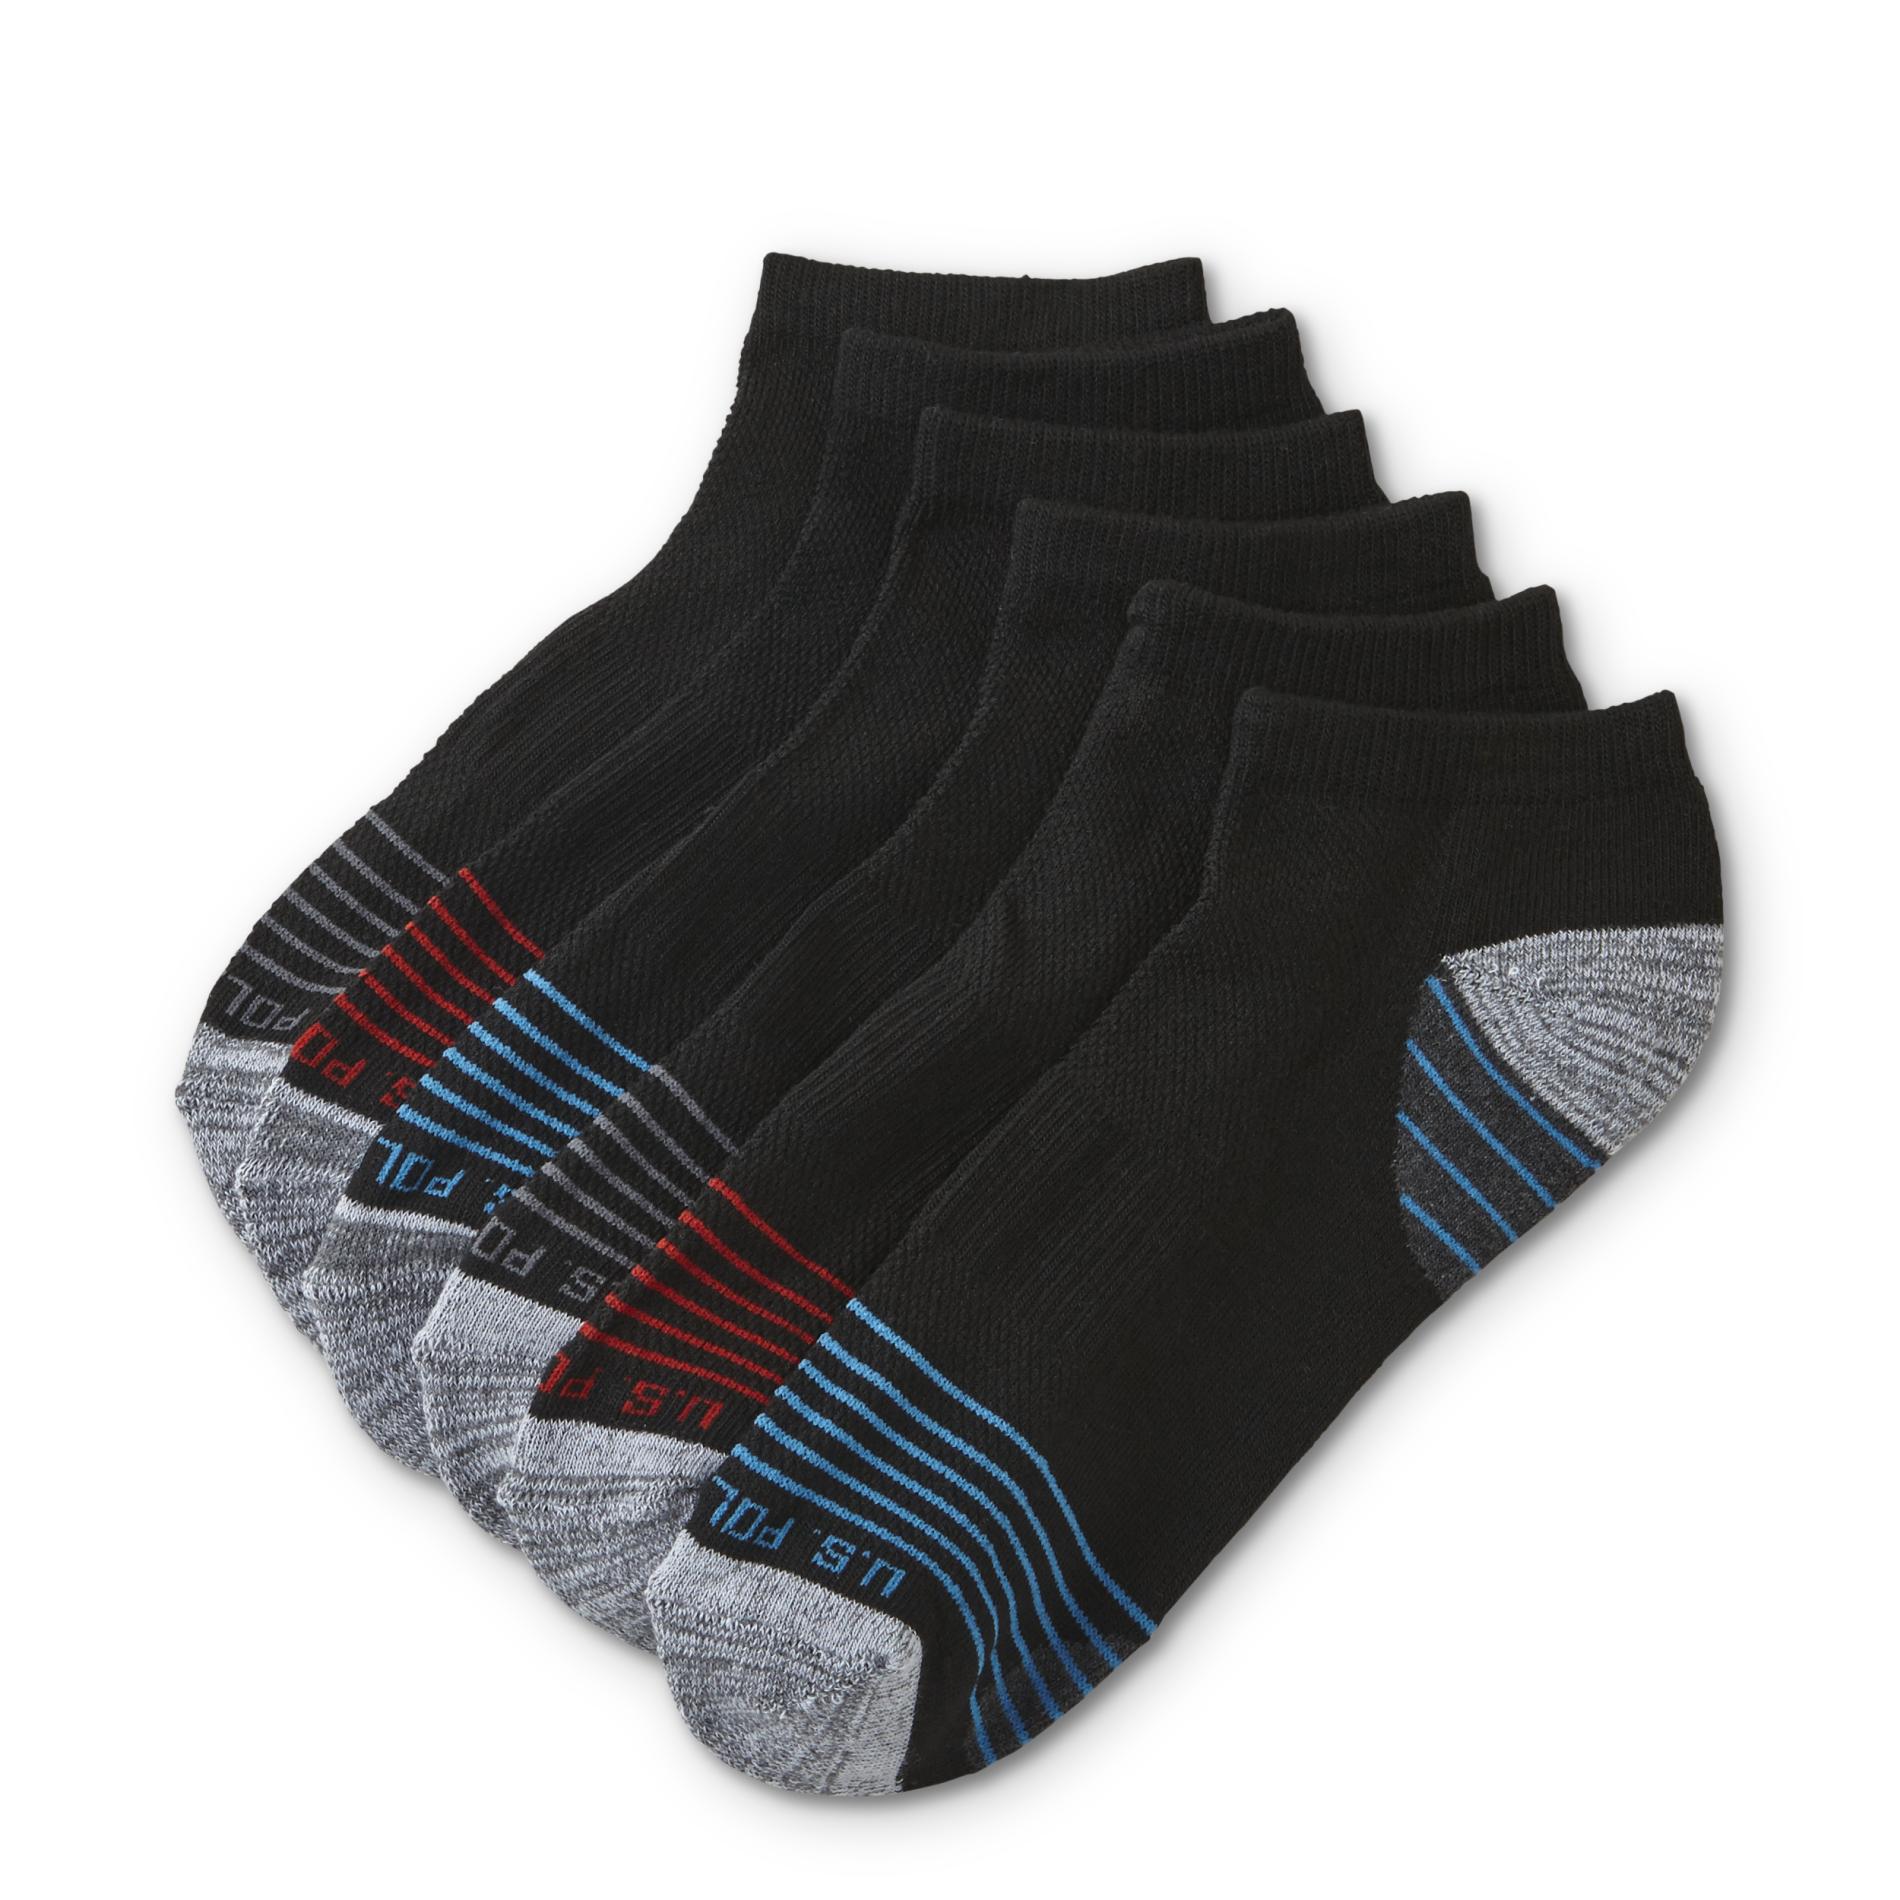 U.S. Polo Assn. Men's 6-Pairs Low-Cut Socks - Striped